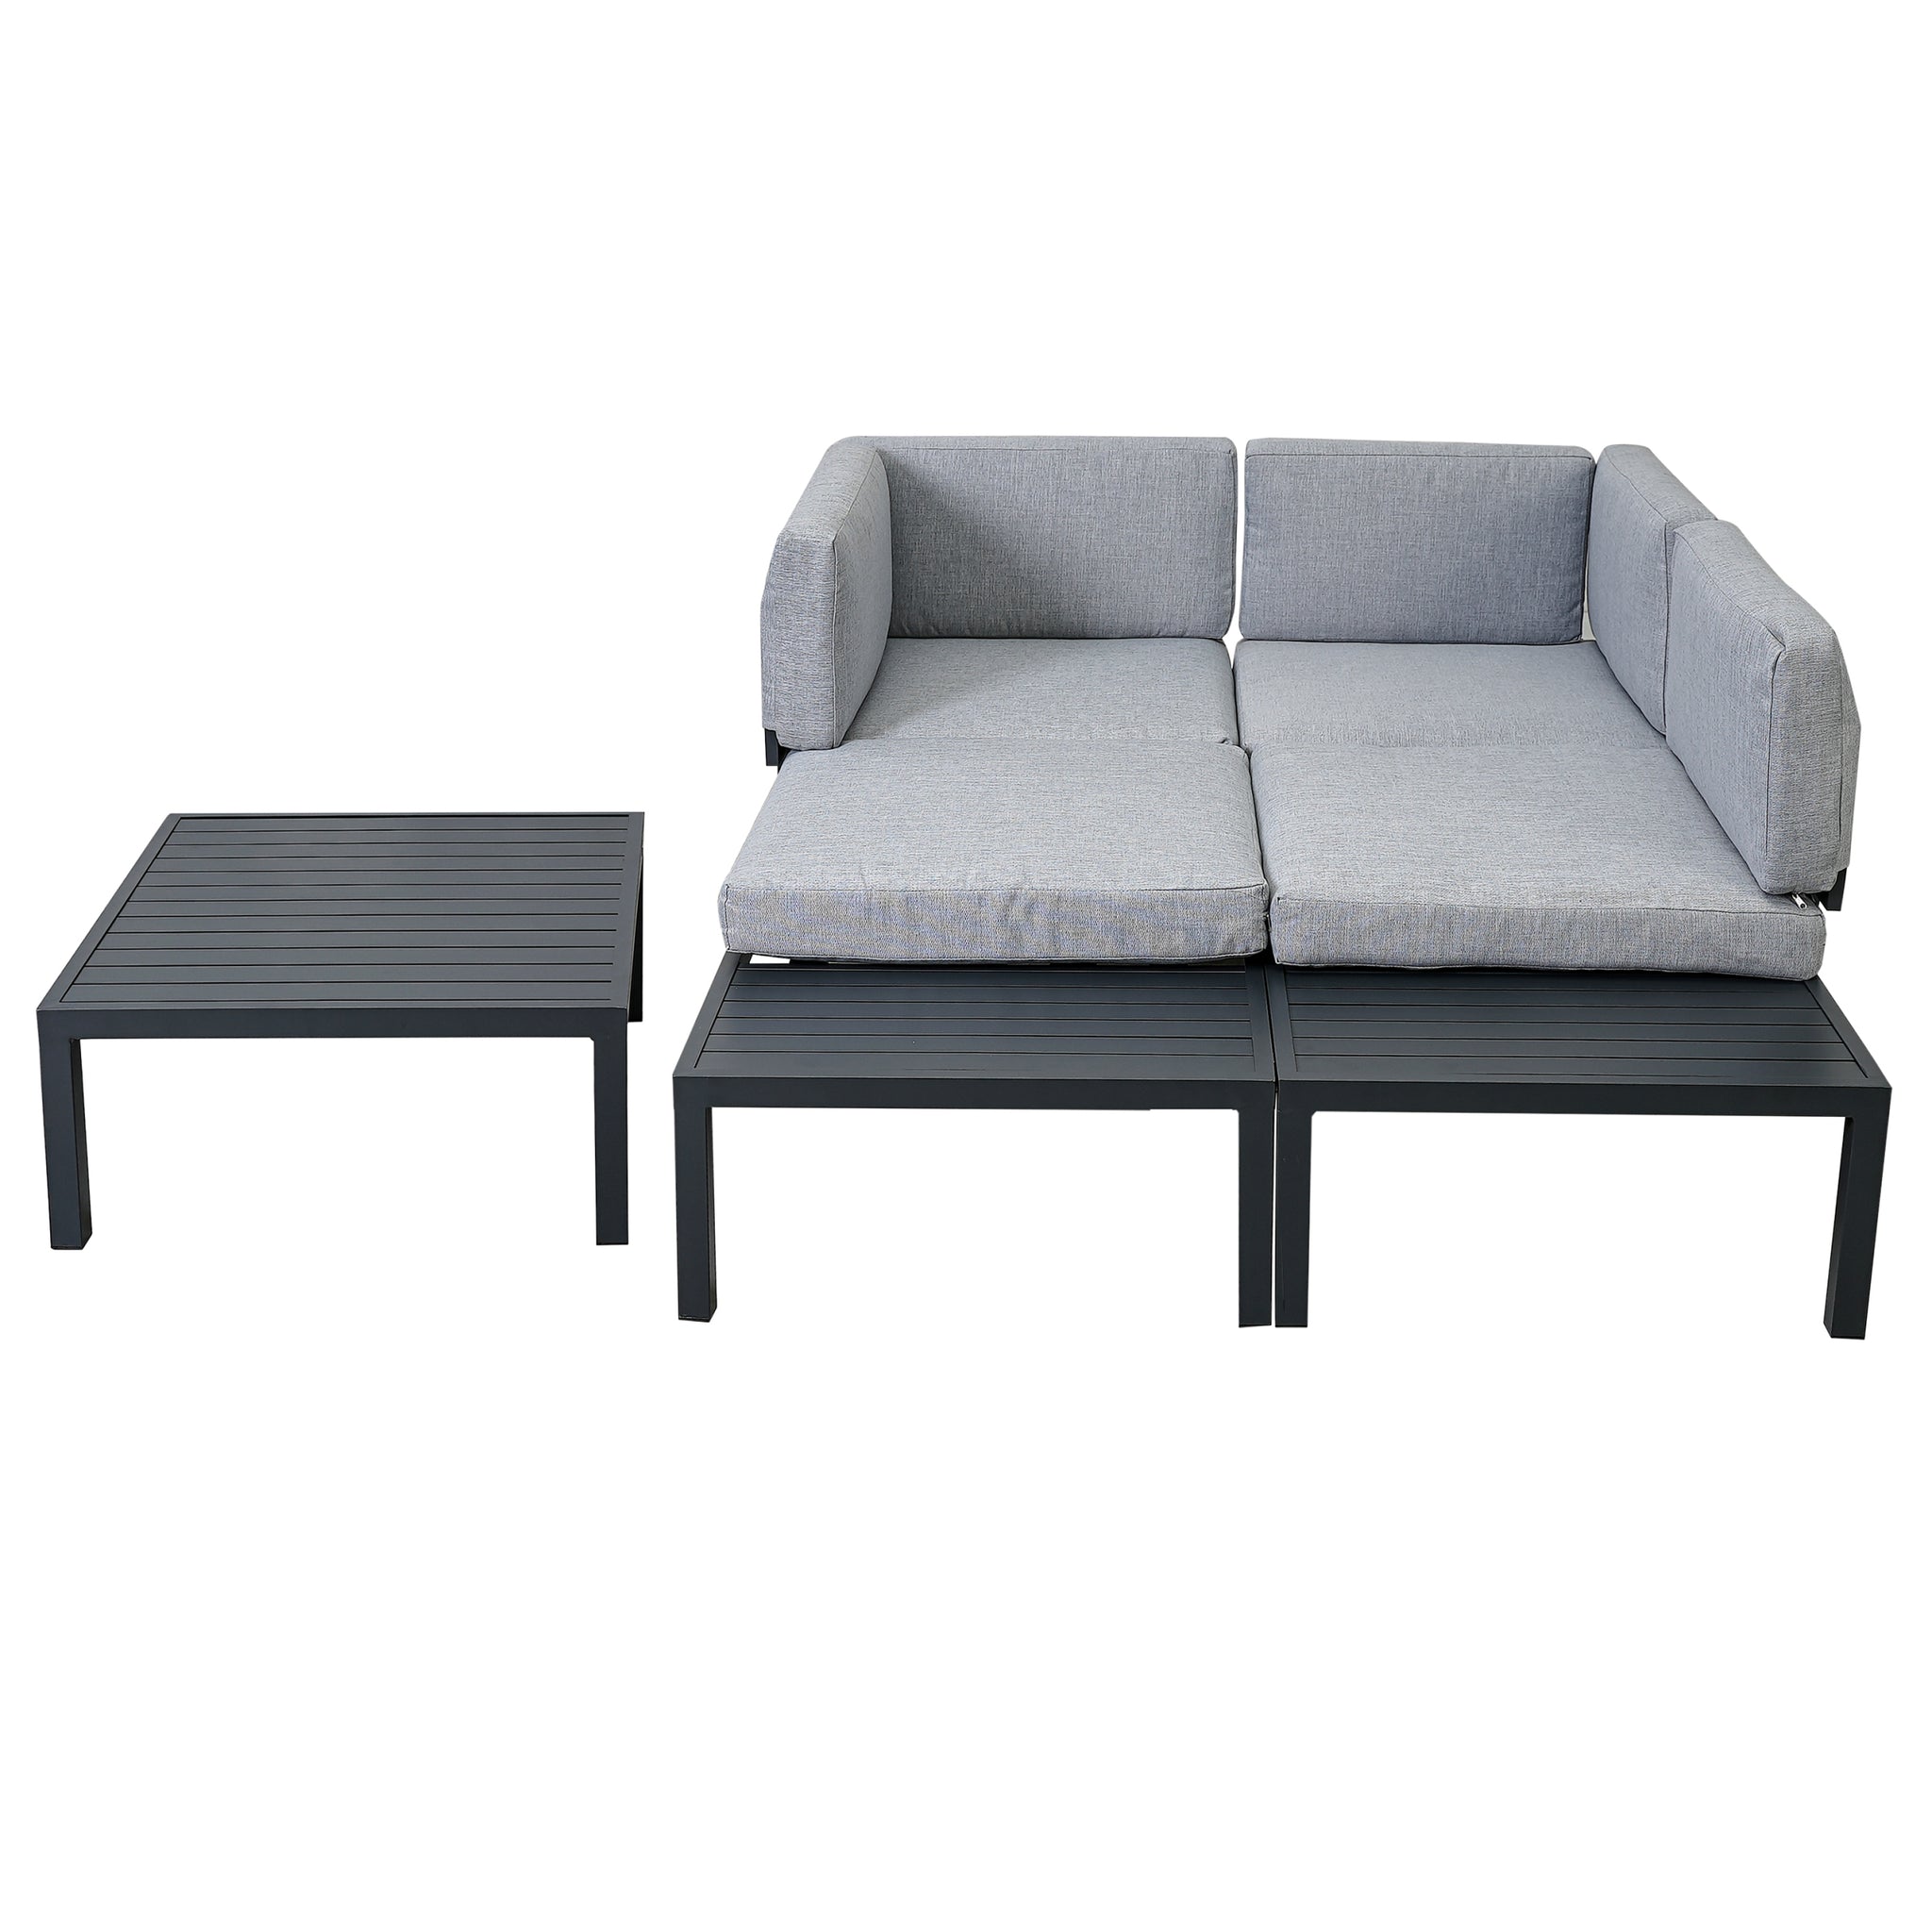 Outdoor 3 piece Aluminum Alloy Sectional Sofa